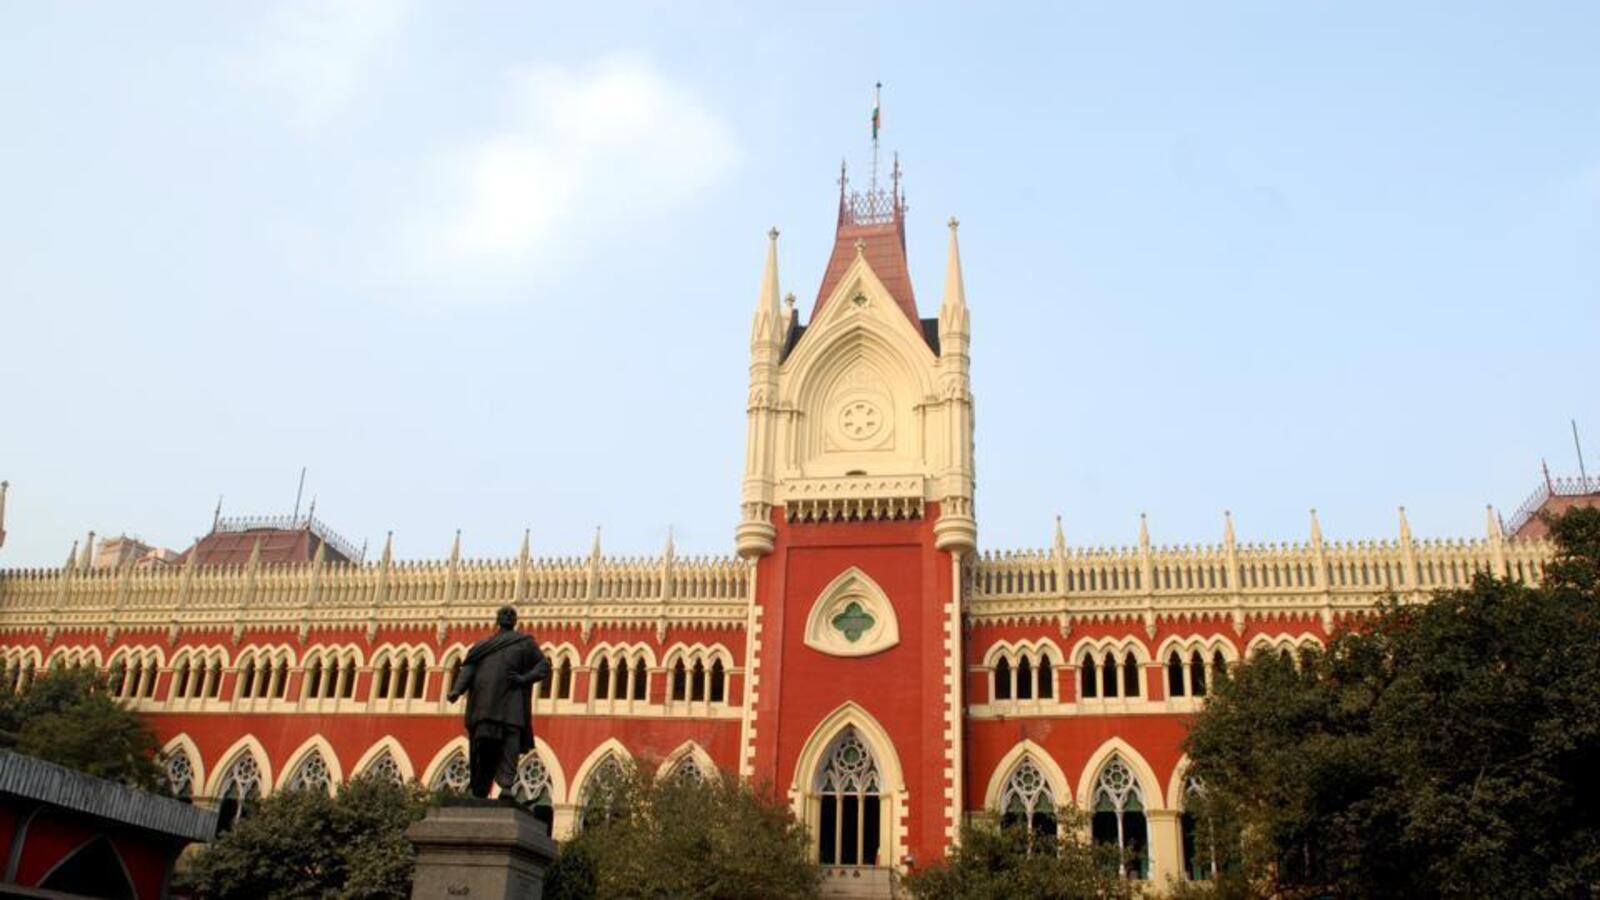 कलकत्ता हाई कोर्ट के जज पर सुप्रीम कोर्ट नाराज, कहा- ...साक्षात्कार देने का किसी न्यायाधीश को अधिकार नहीं Supreme Court angry on the judge of Calcutta High Court, said- No judge has the right to give interview